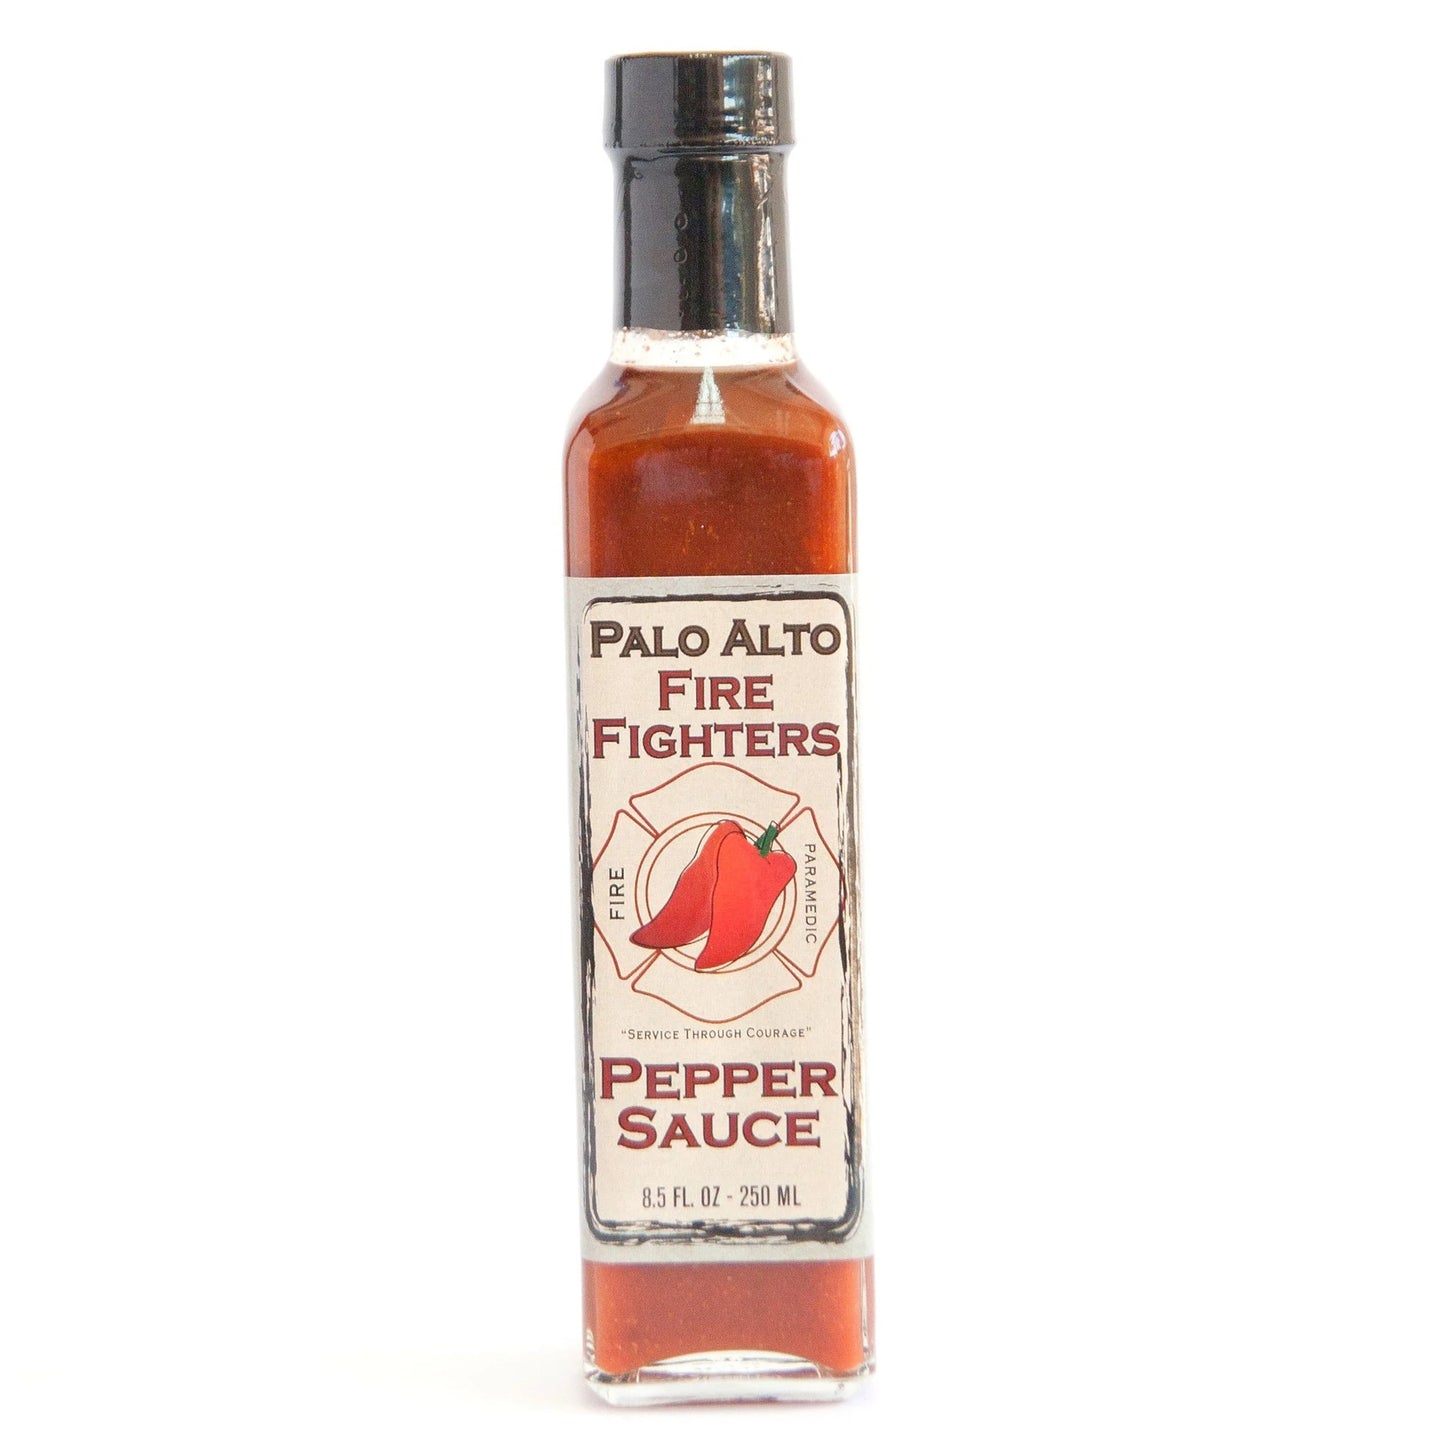 Palo Alto Fire Fighters Pepper Sauce Original